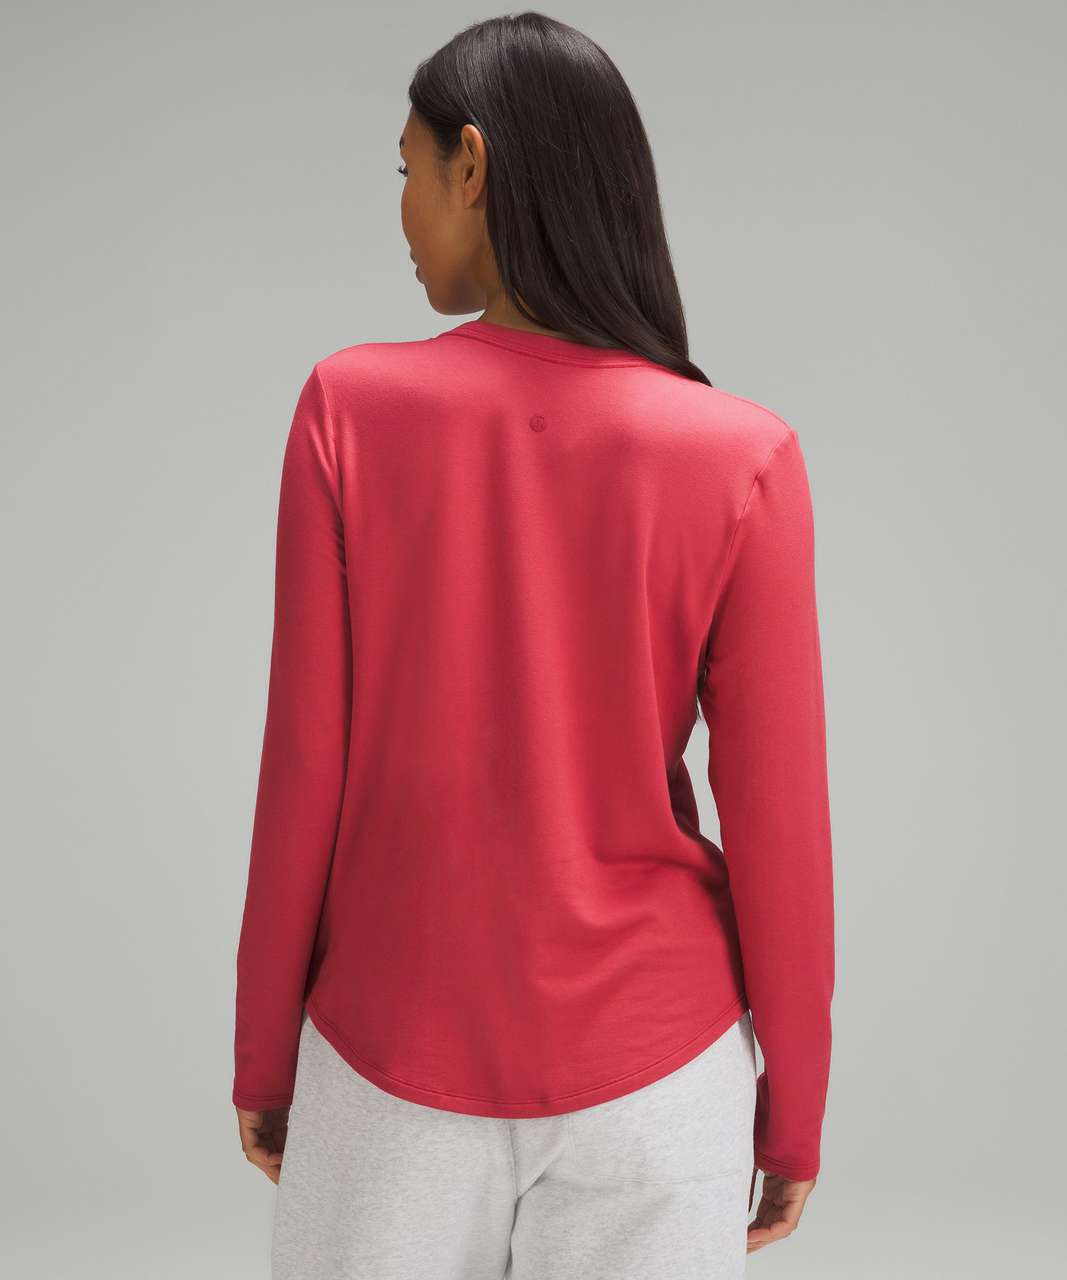 Lululemon Love Modal Fleece Long-Sleeve Shirt - Vintage Rose